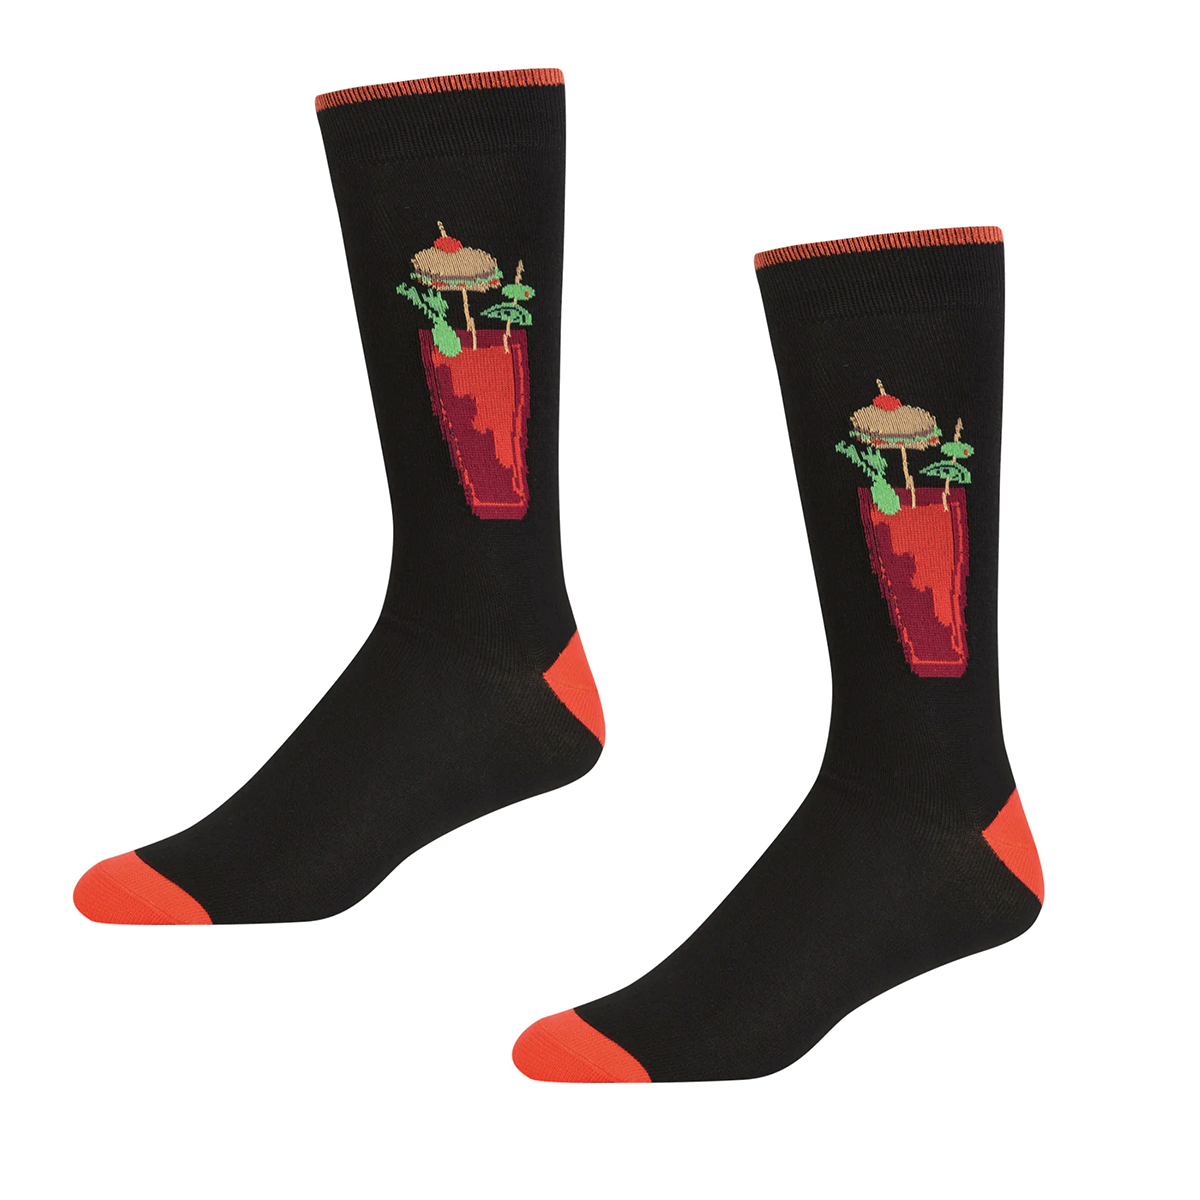 Single Pair Libero Socks Cocktail Print Size 10-13